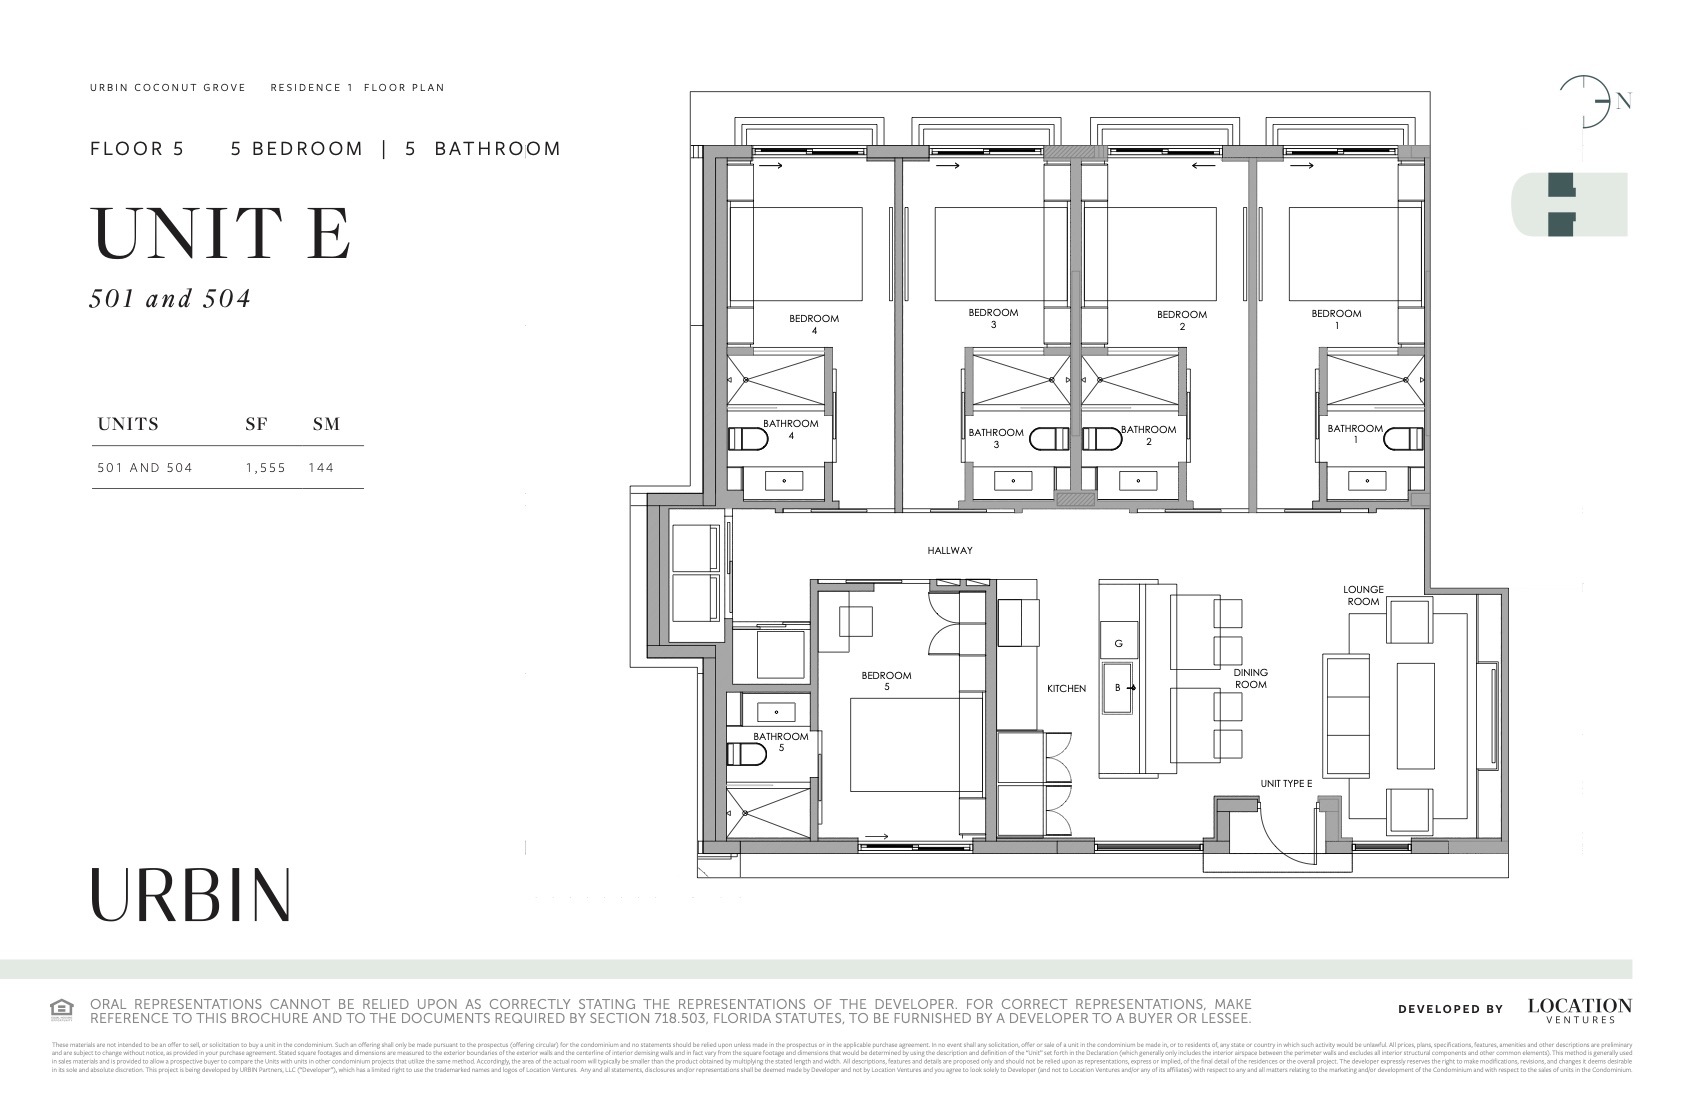 Floor Plan for Urbin Coconut Grove Floorplans, Unit E